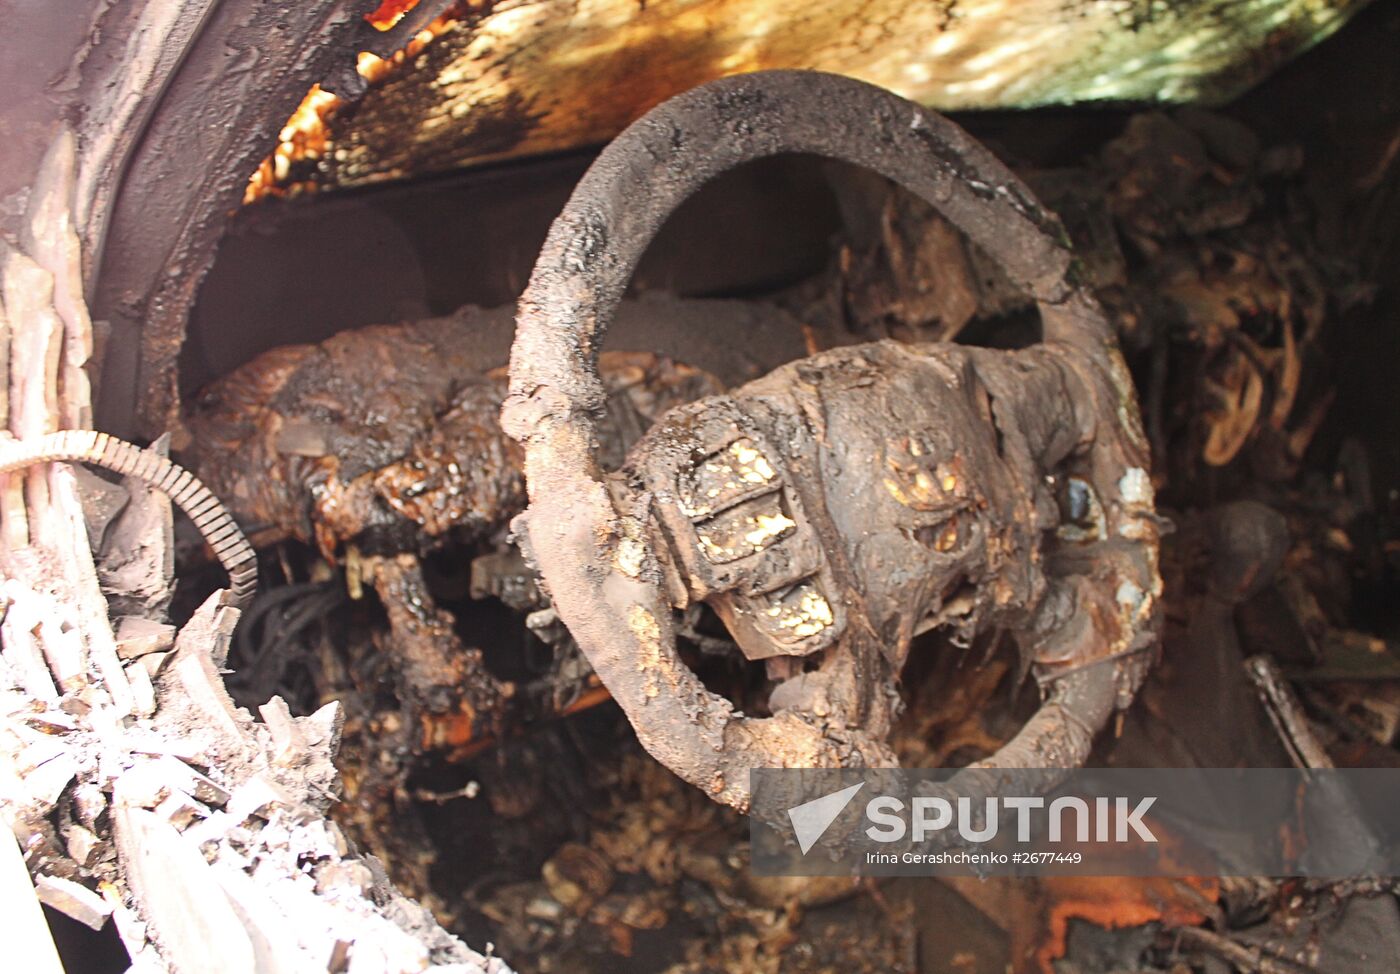 Six OSCE mission cars burned in Donetsk